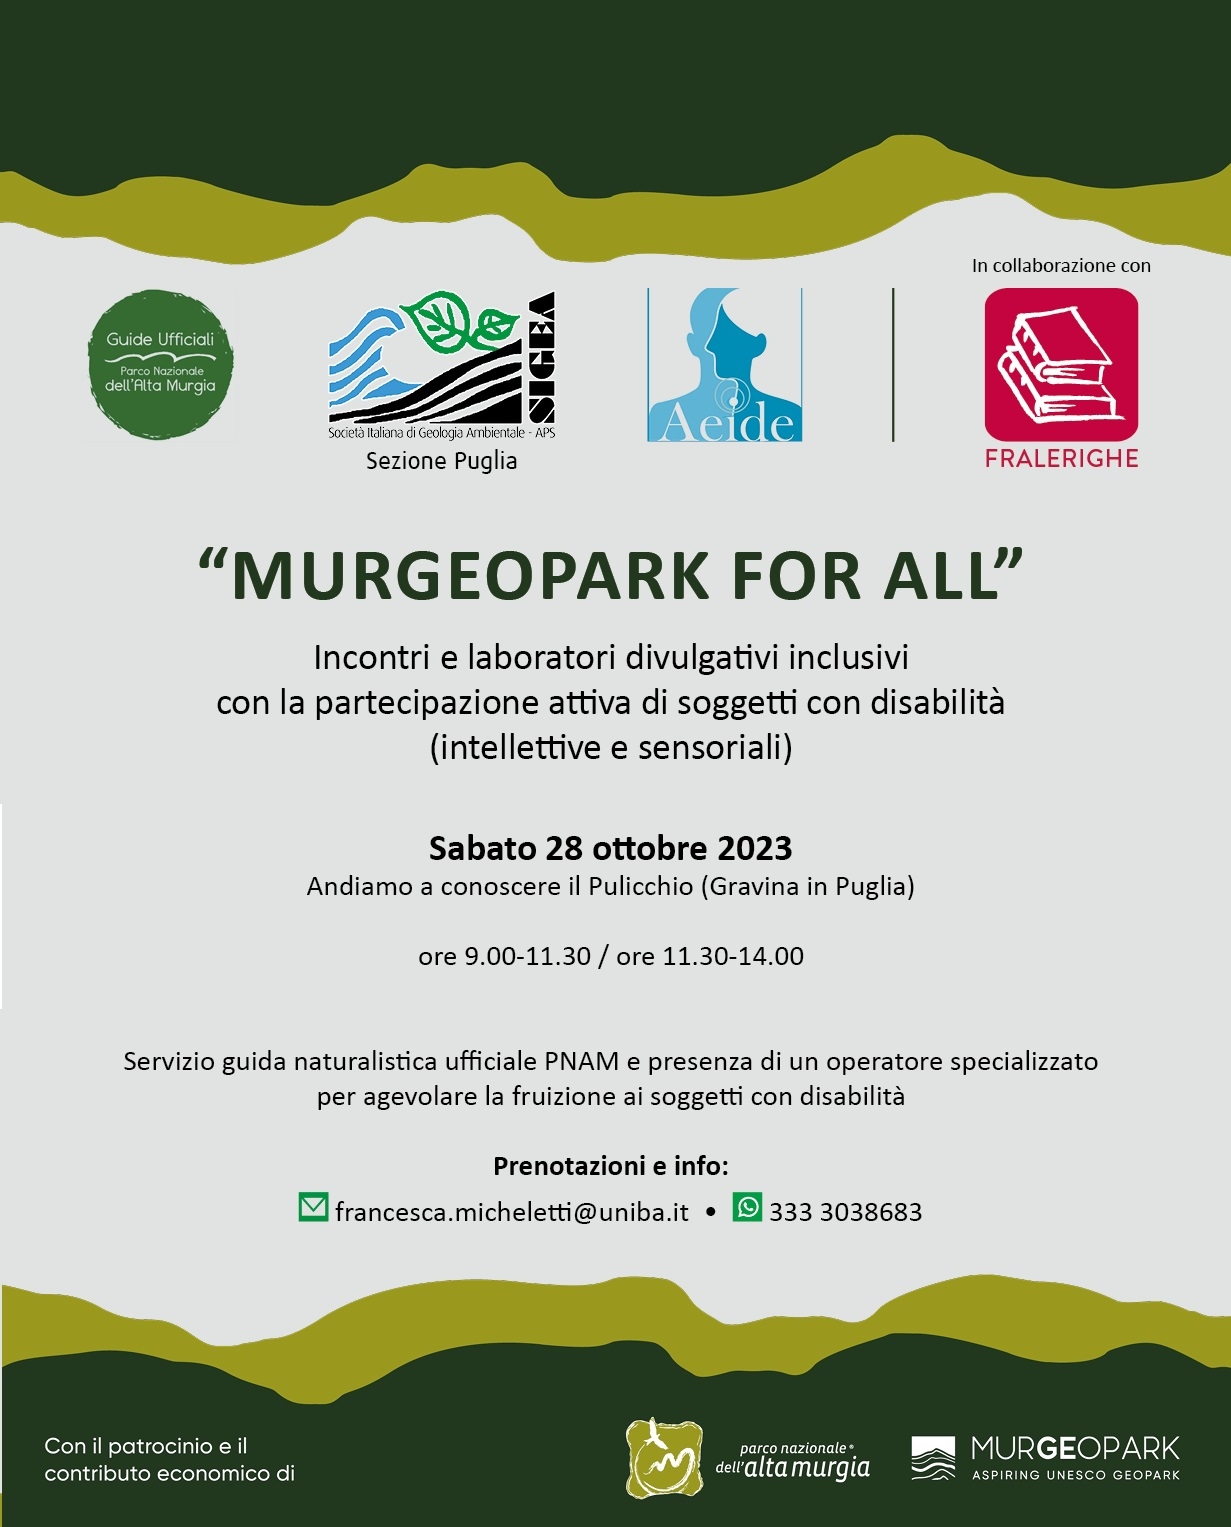 Murgeopark for all